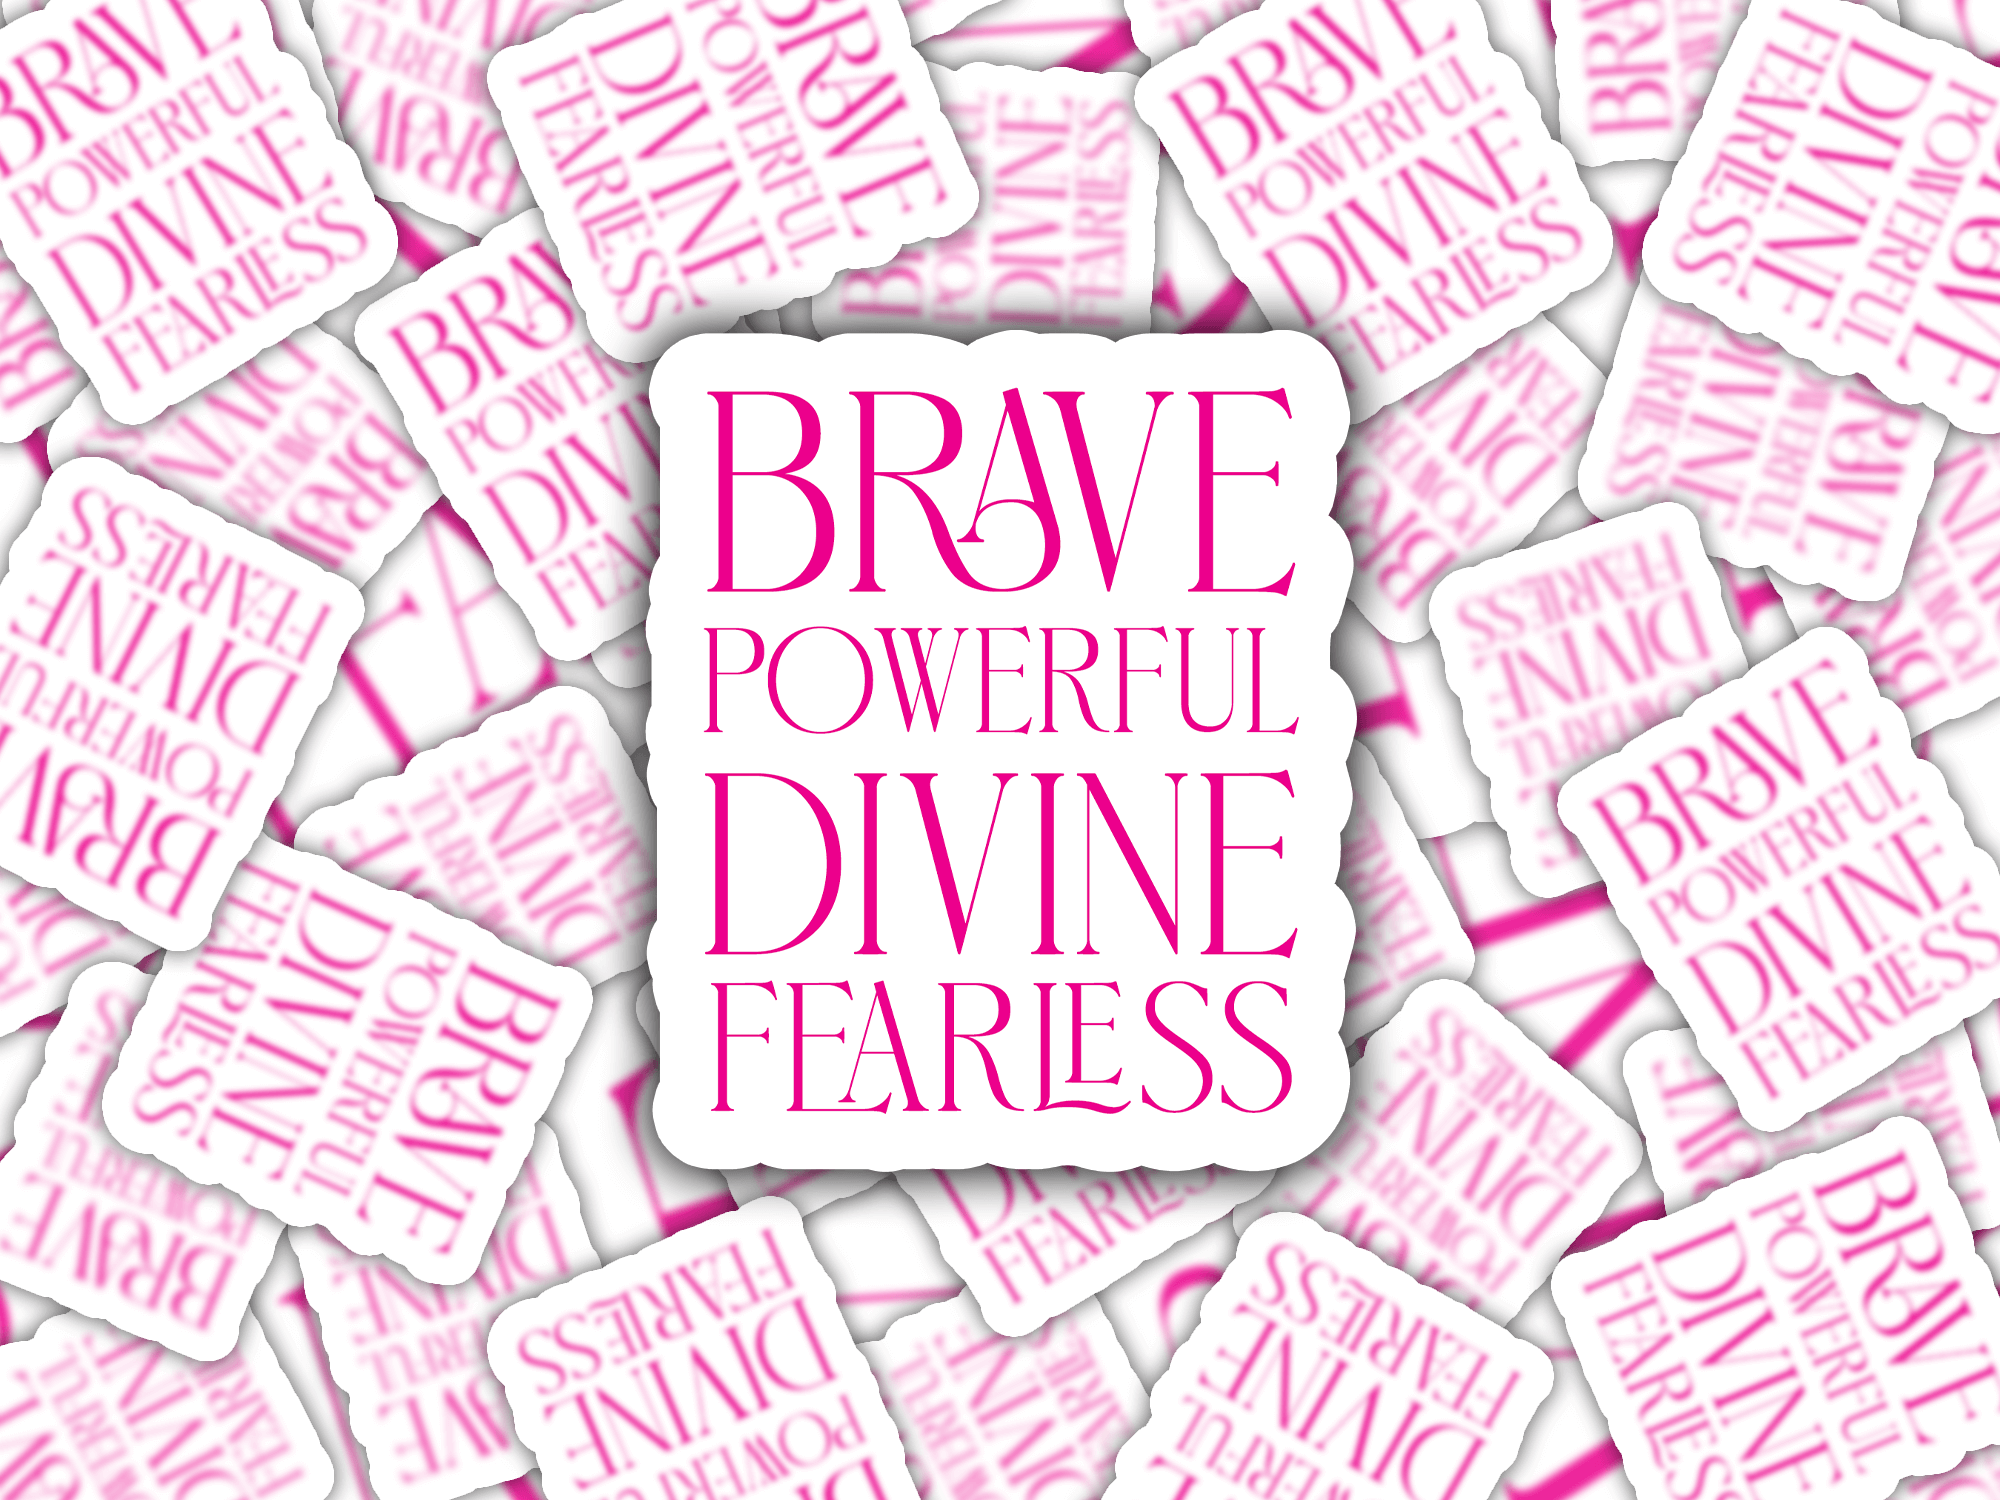 Sticker Brave powerful divine fearless, gift for friend, encouragement gift